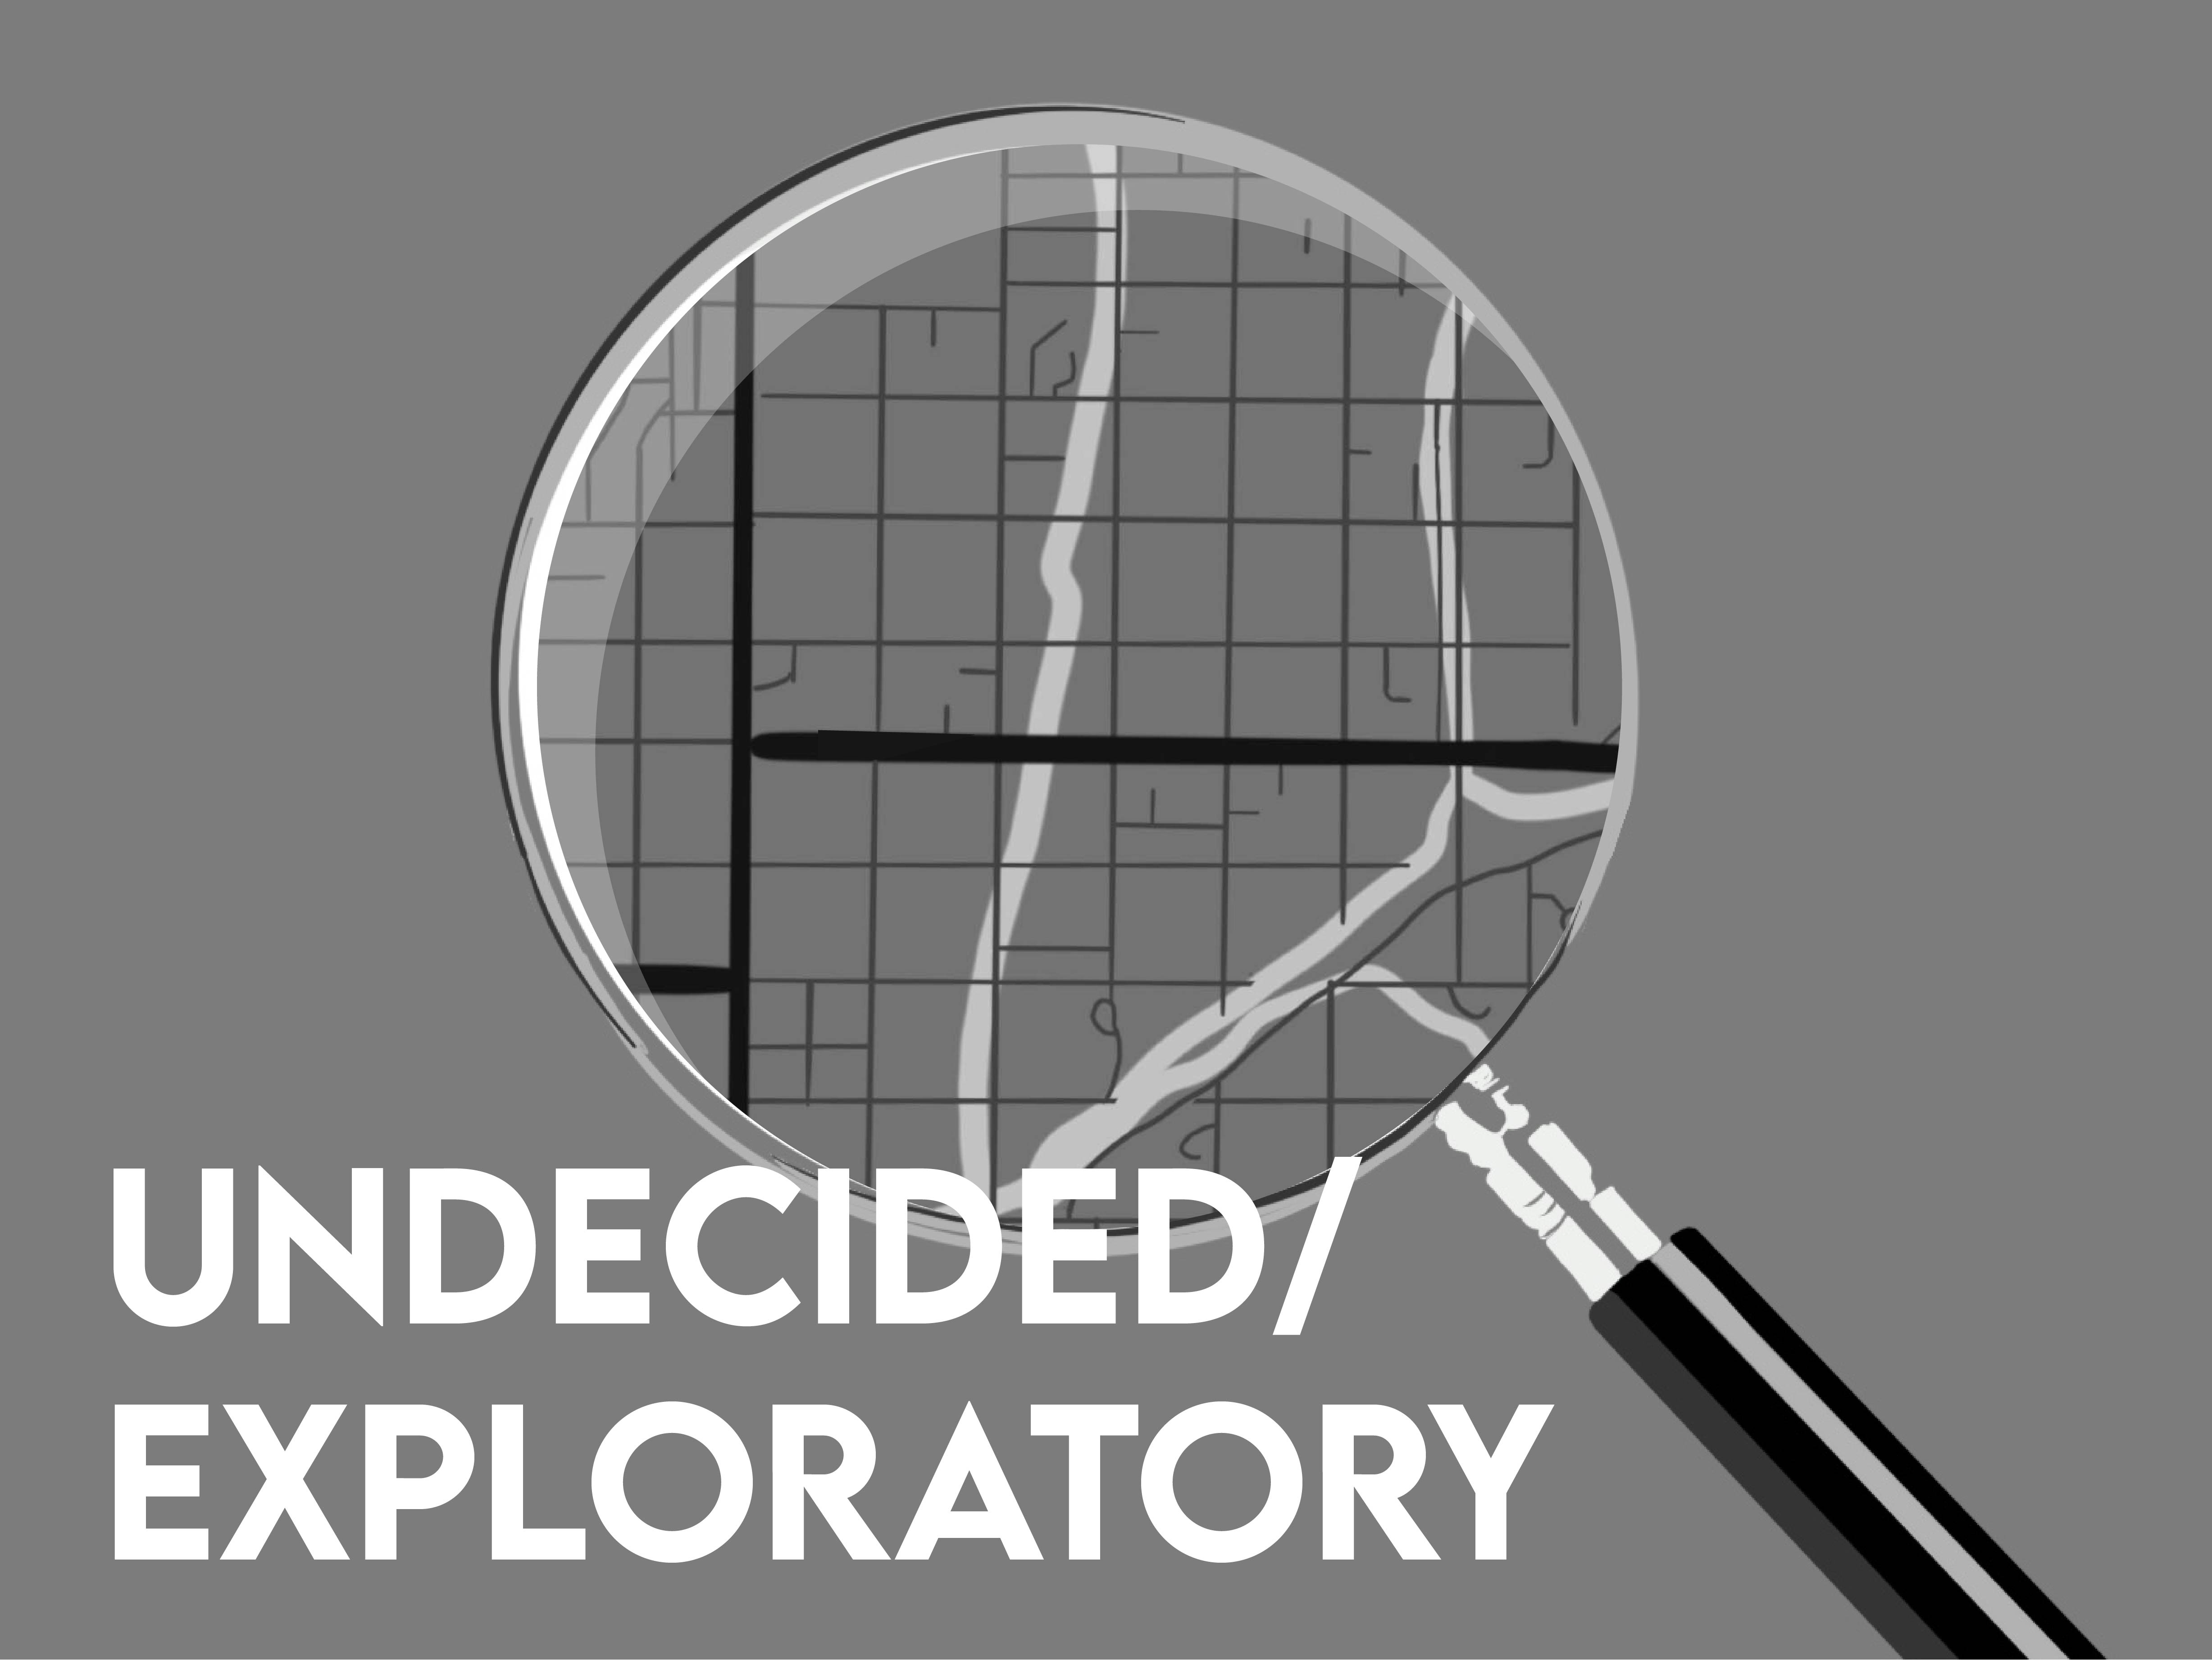 exploratory/undecided